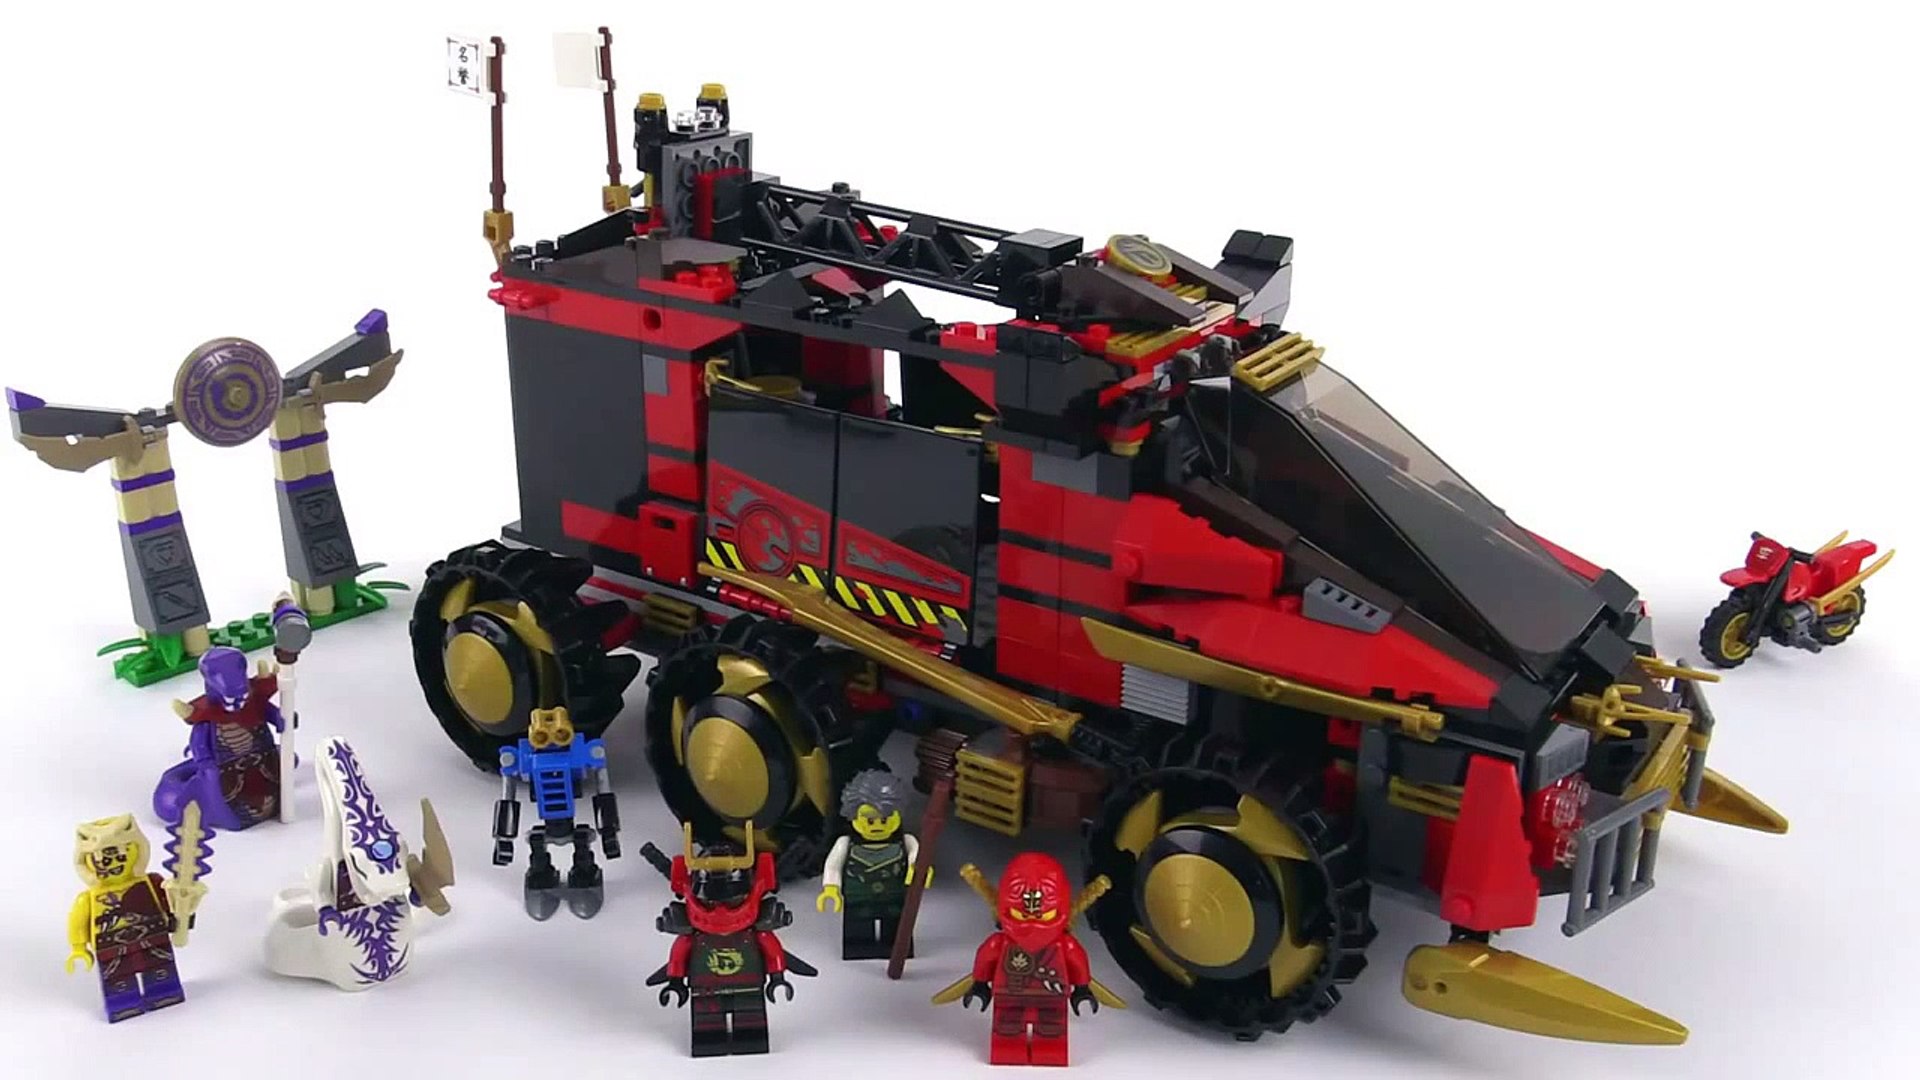 Lego Ninjago NINJA DB X 70750 Stop Motion Build Review - Dailymotion Video